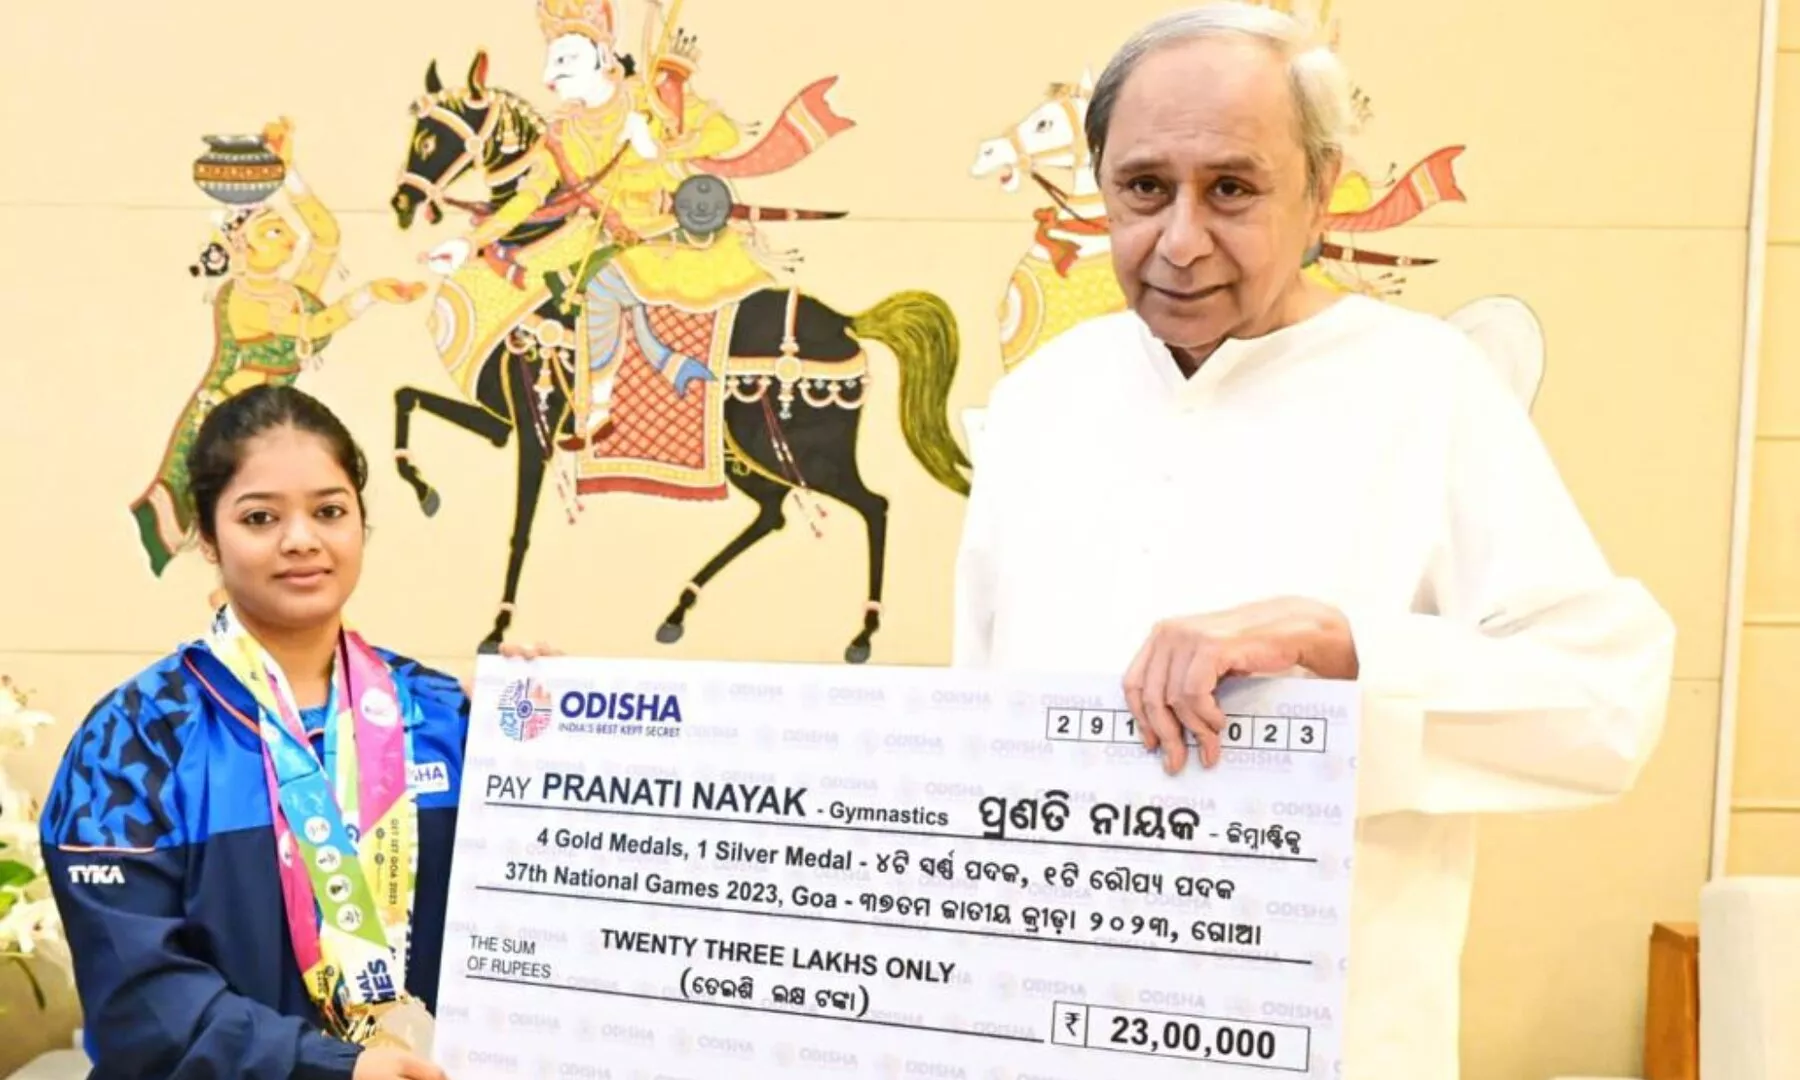 Odisha CM Naveen Patnaik felicitates gymnast Pranati Nayak for her achievements in National Games 2023